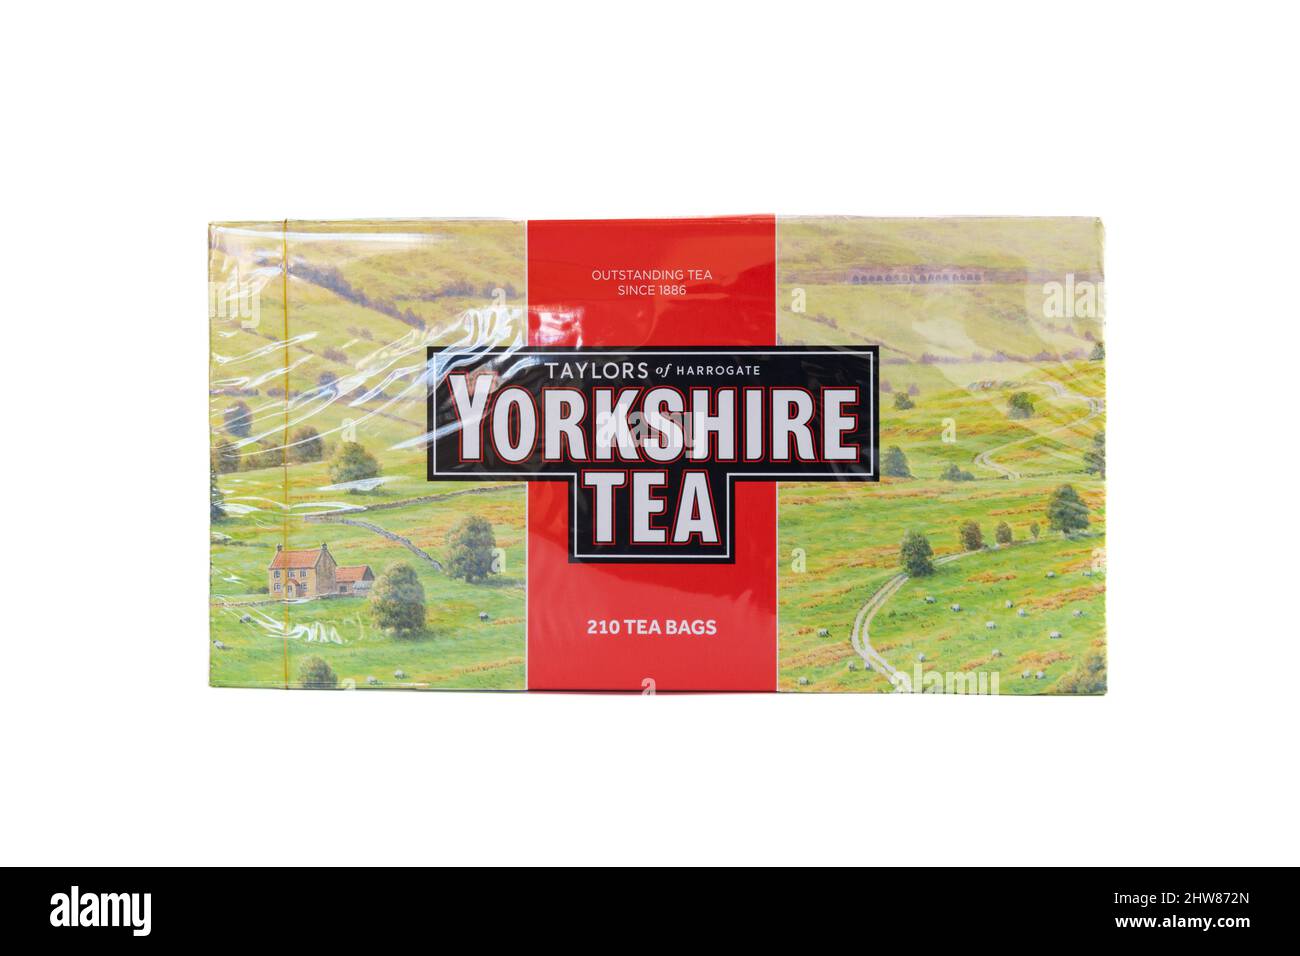 yorkshire tea Stock Photo